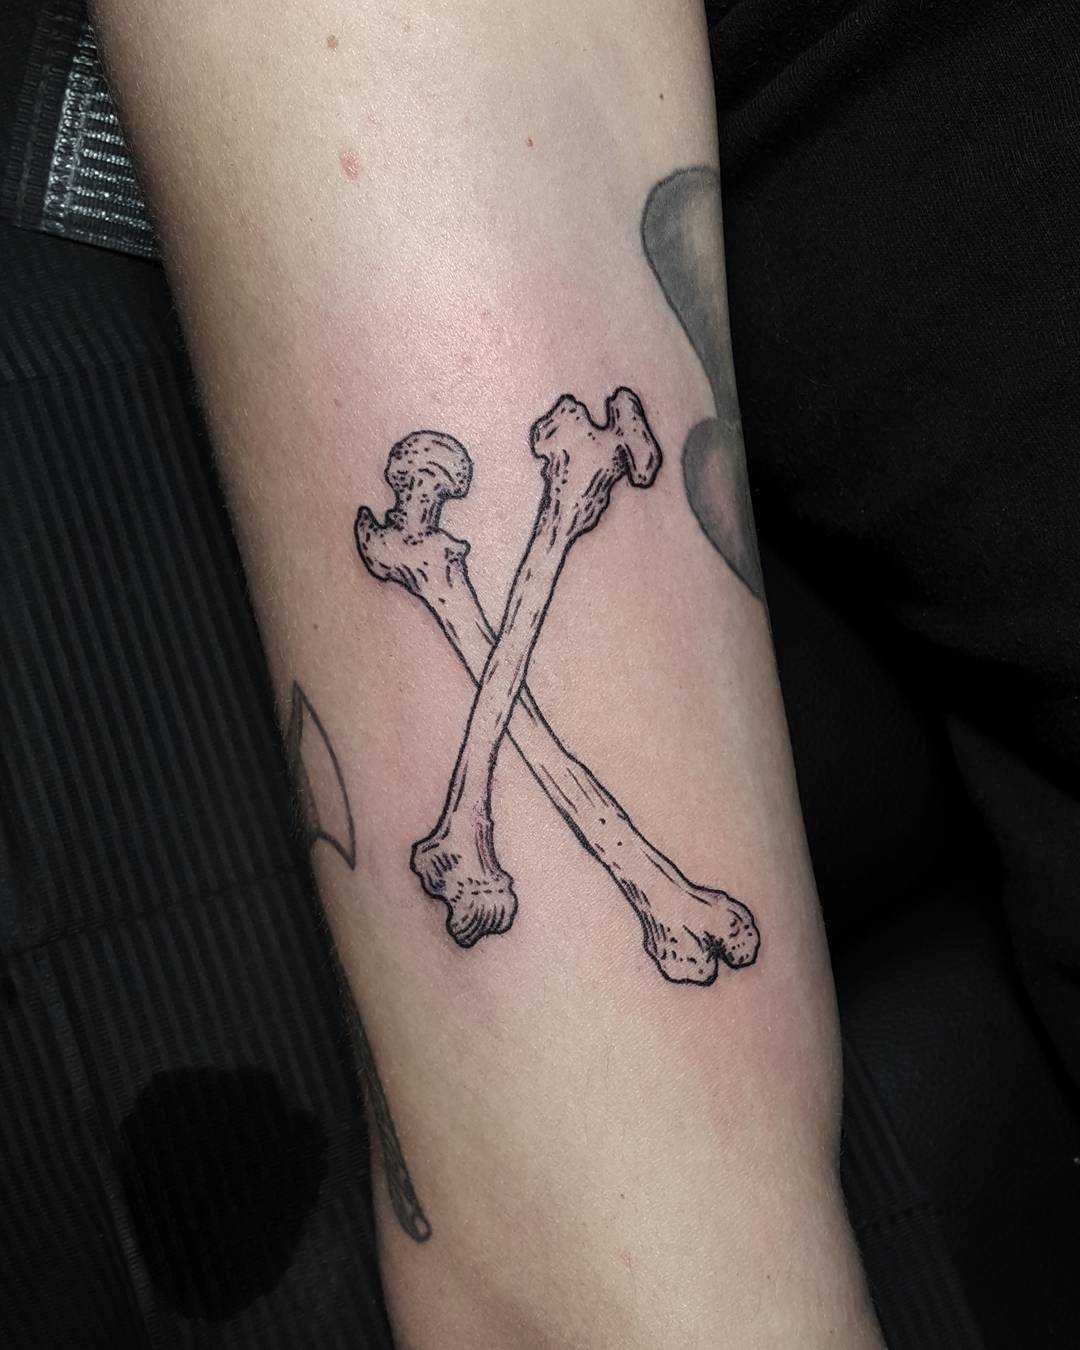 Crossed bones tattoo